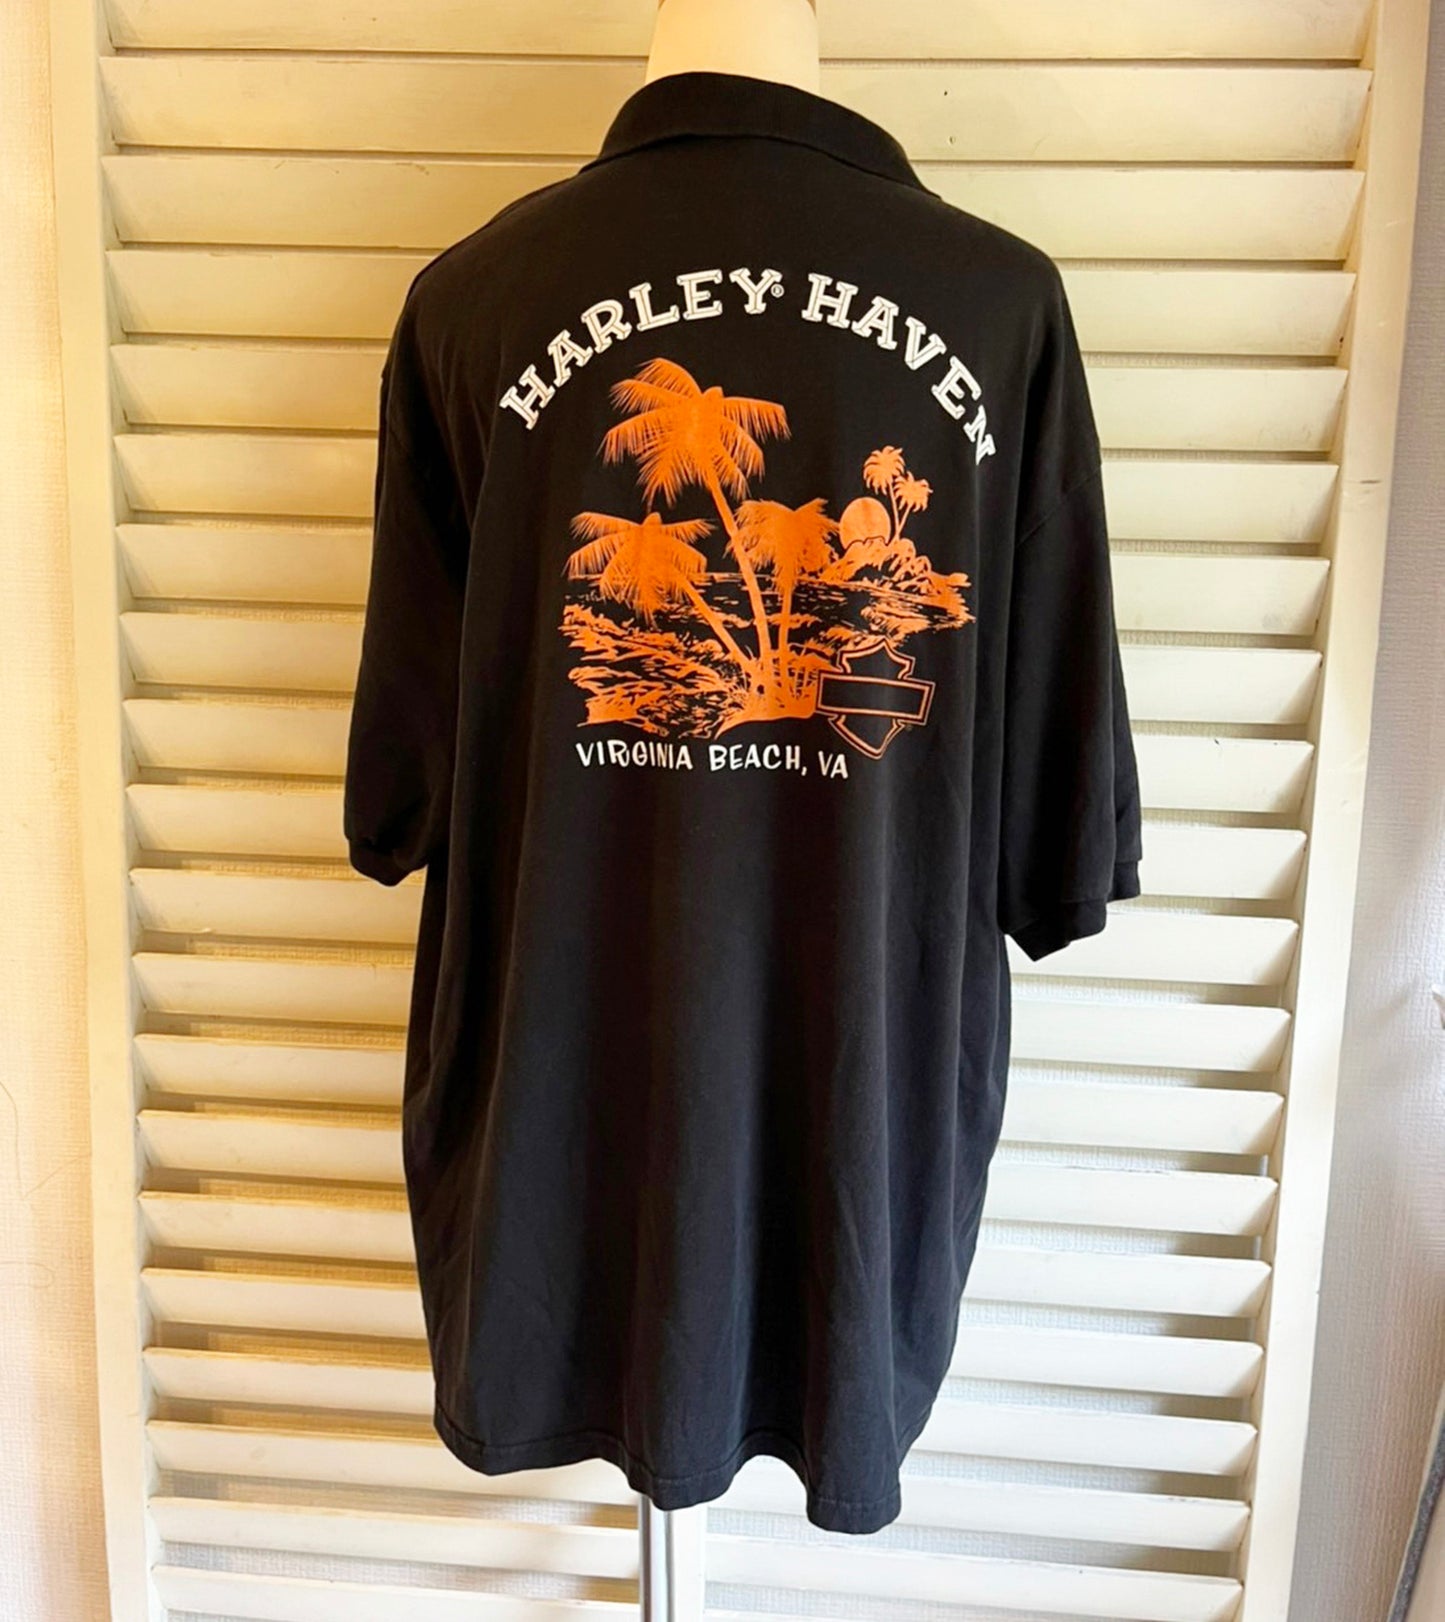 【Harley Davidson】ハーレーダビッドソン virginia beach 両面プリントポロシャツ (men's XL)